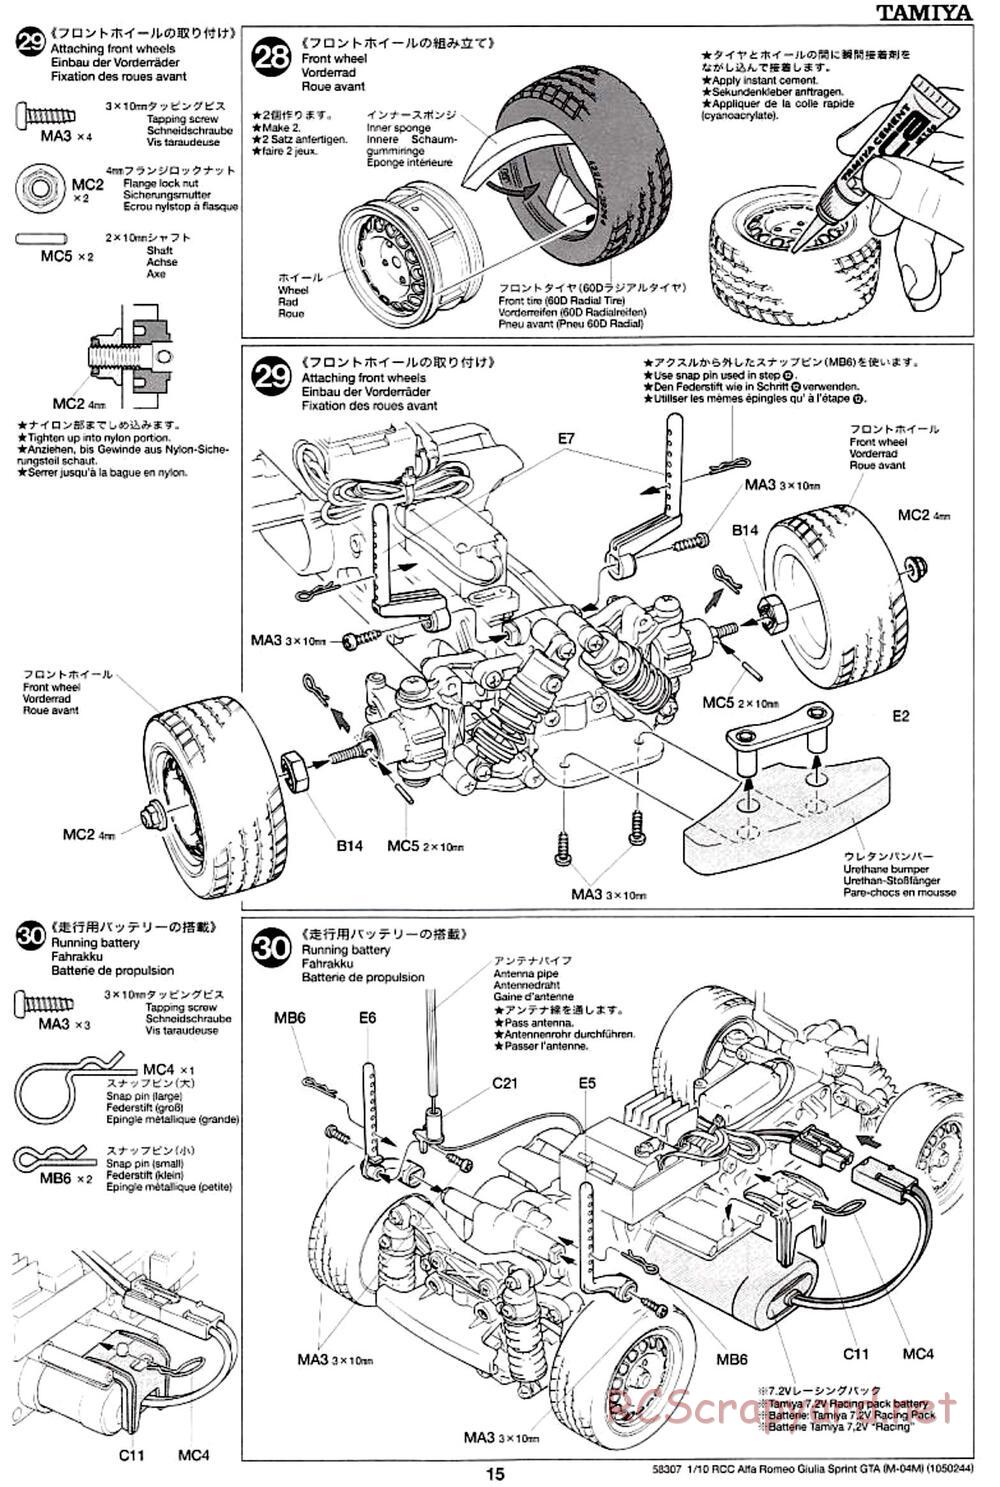 Tamiya - Alfa Romeo Giulia Sprint GTA - M04M Chassis - Manual - Page 15